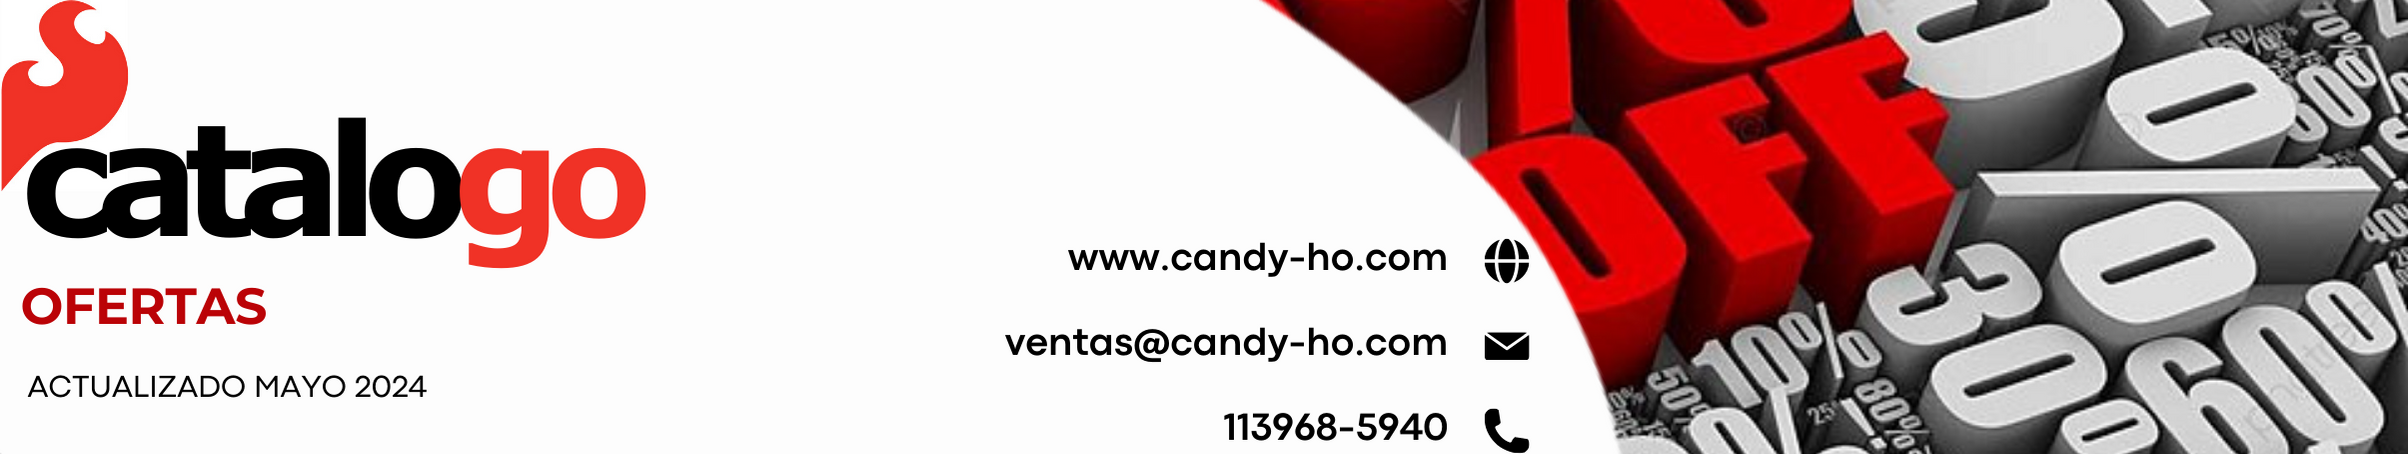 Portada del Catálogo Ofertas 2024 de Candy-Ho